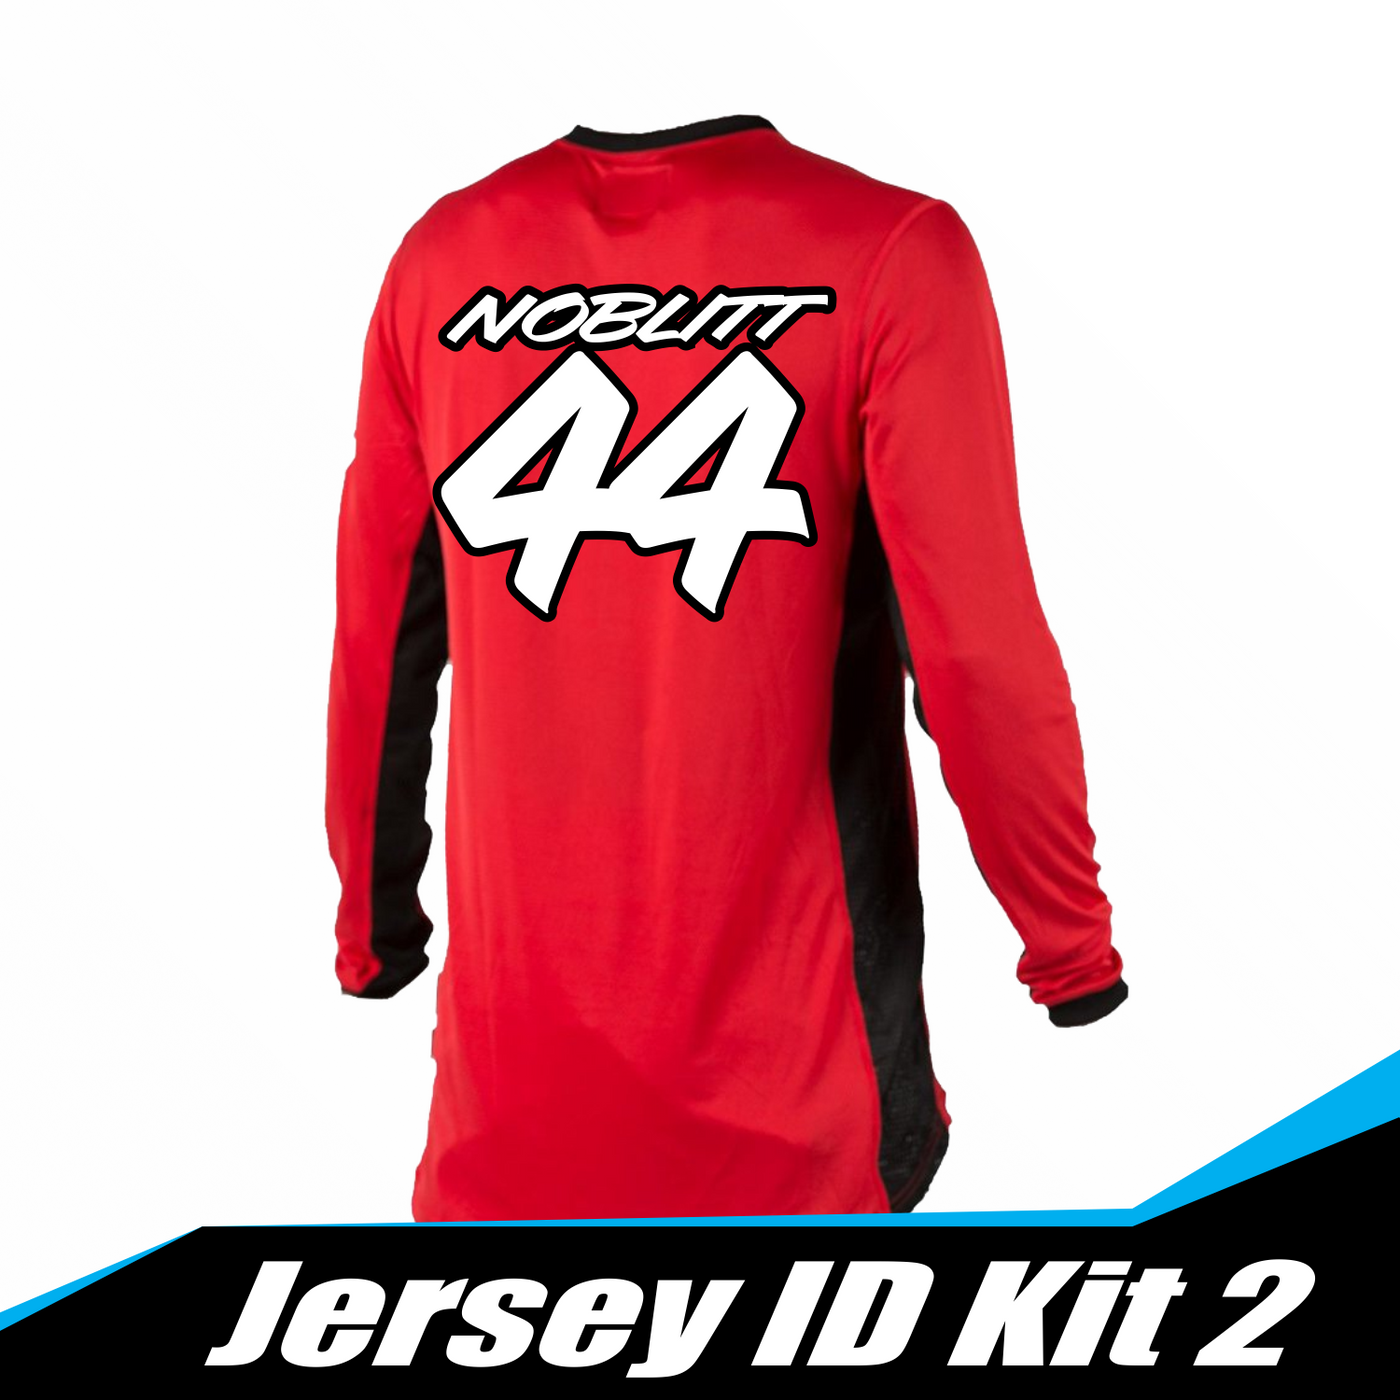 Jersey ID Number 2 - Y&S Designs, LLC